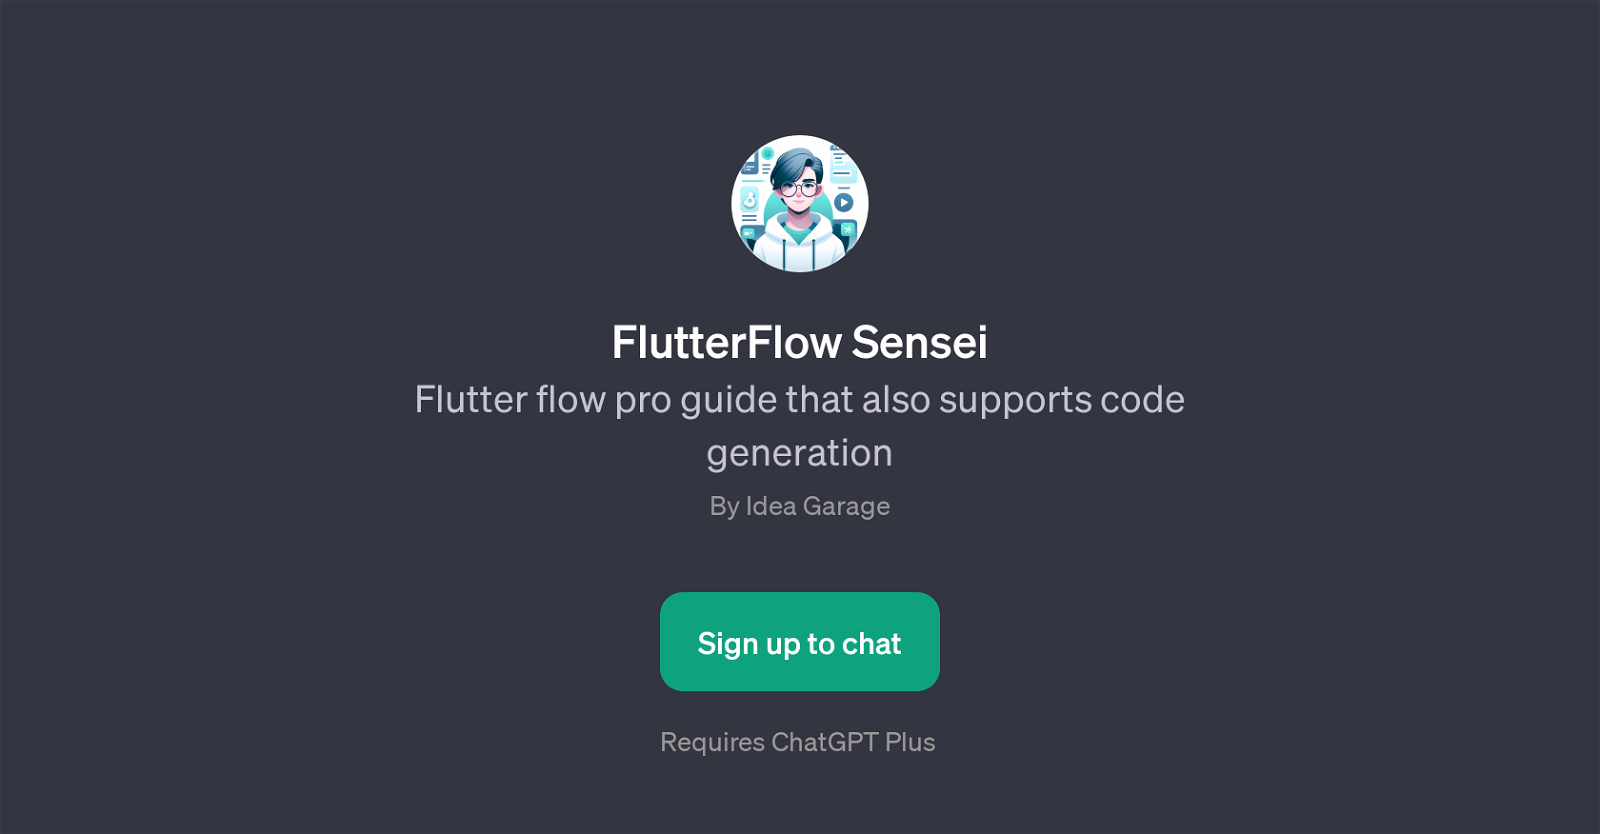 FlutterFlow Sensei website